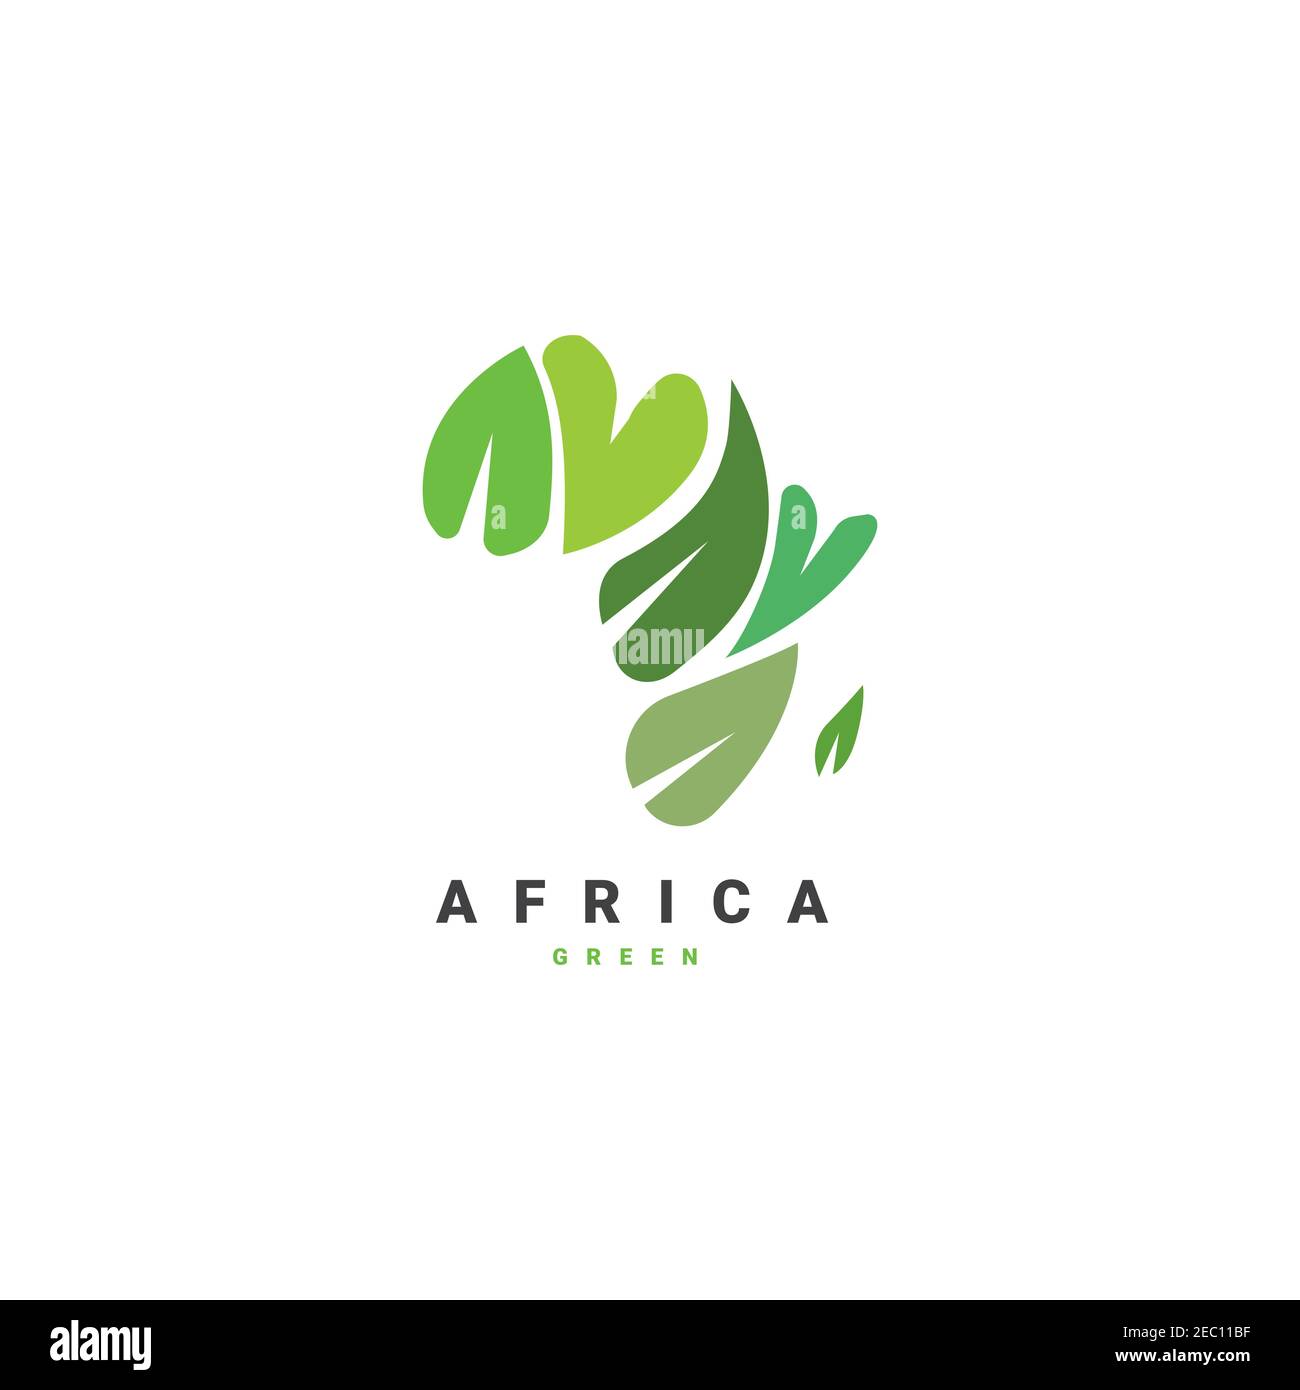 Africa map with leaf symbol logo design illustration vector template Stock Vector